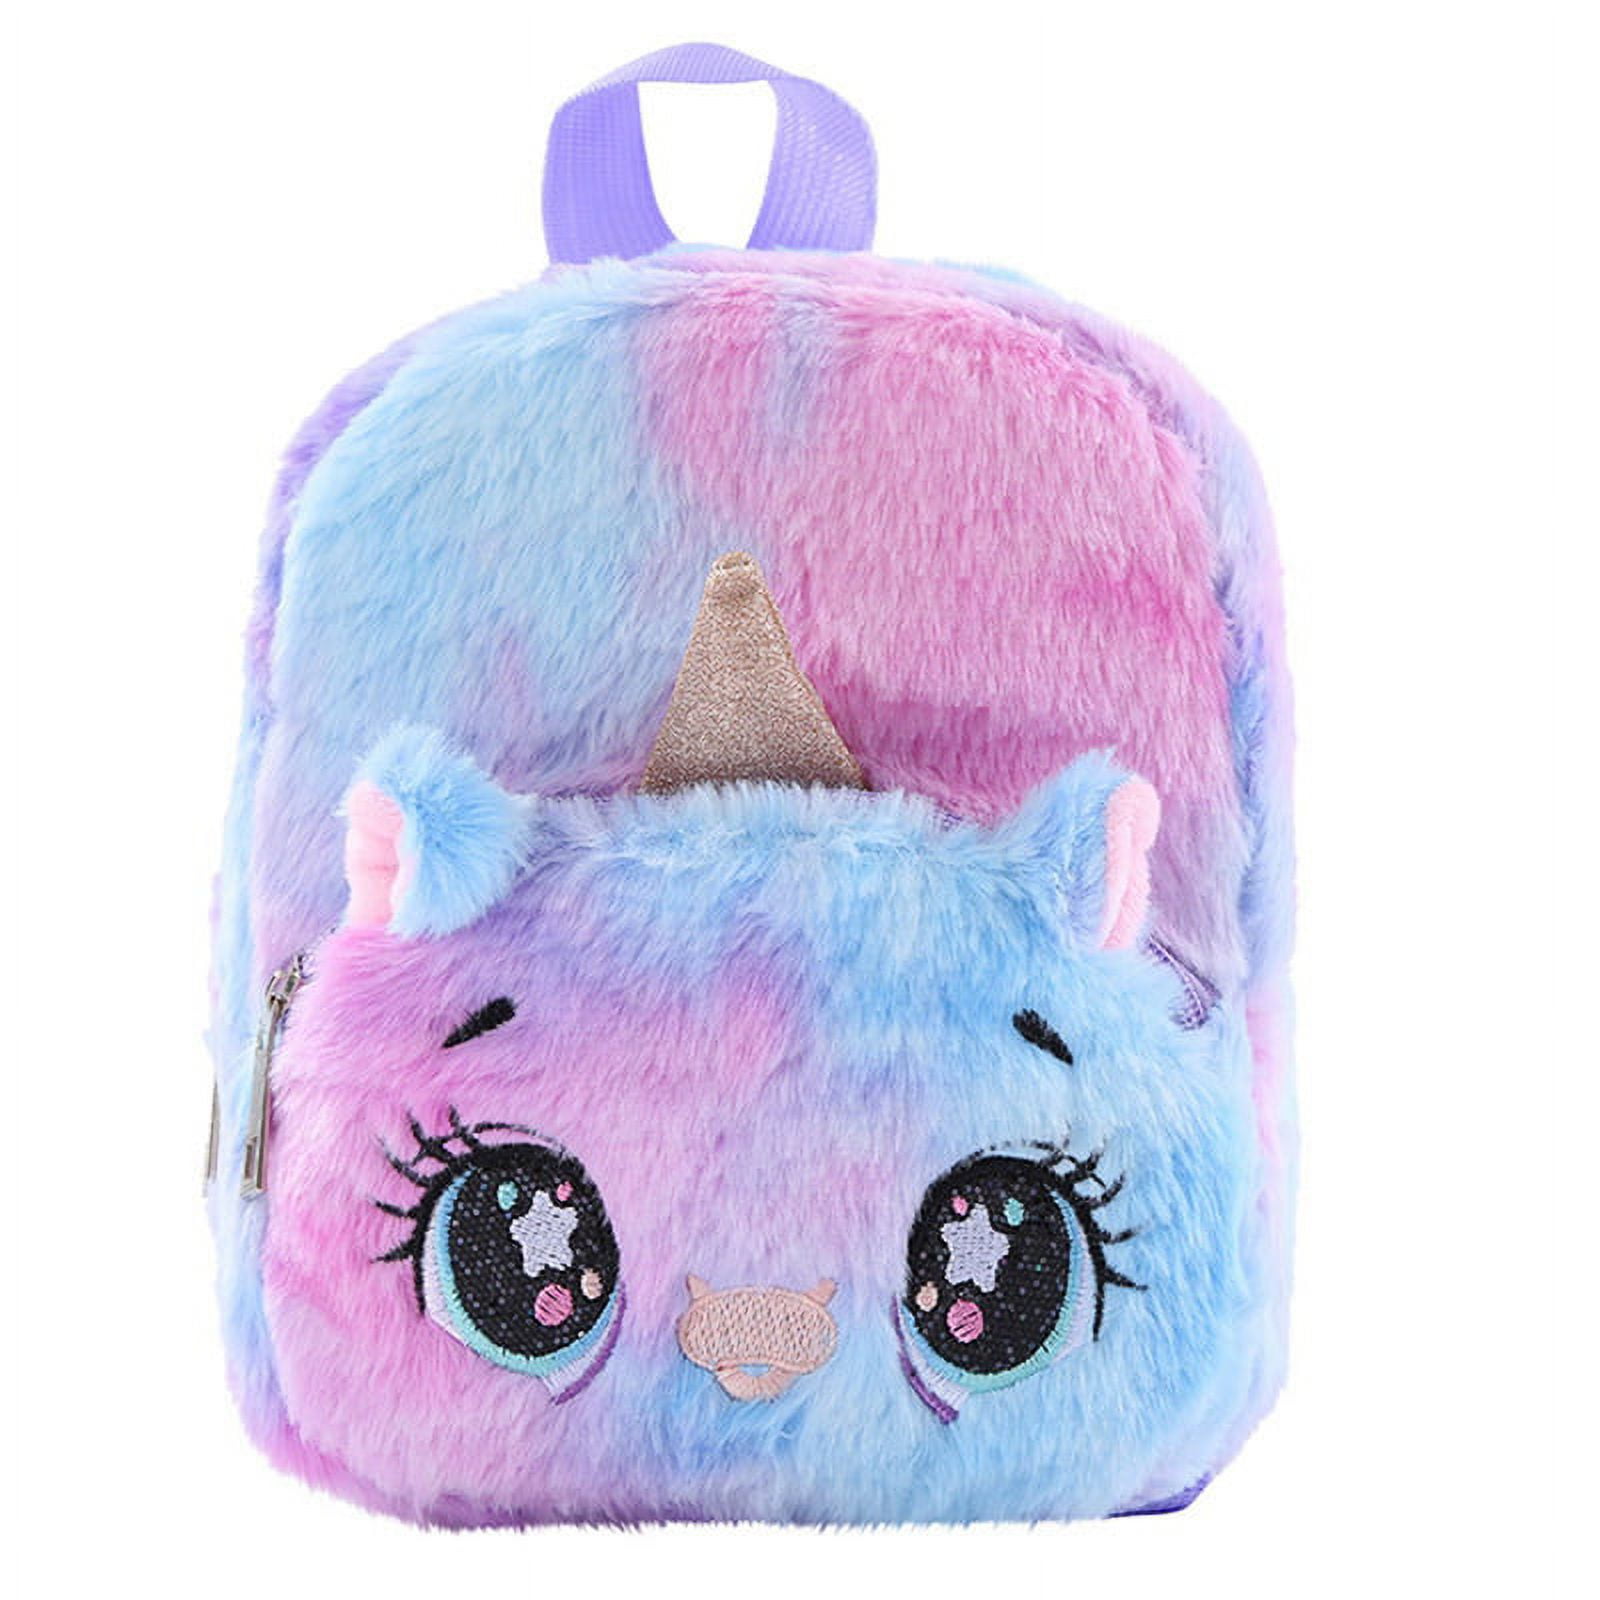 FeiraDeVaidade Unicorn Backpack Girls Plush Cute Mini Bookbags School Bags for Nursery Unicorn Plush School Bag Plush School Bag b620e85e 3248 49c8 94e4 e1968c03bb3e.9682724b08b99656ce457a0577c80589